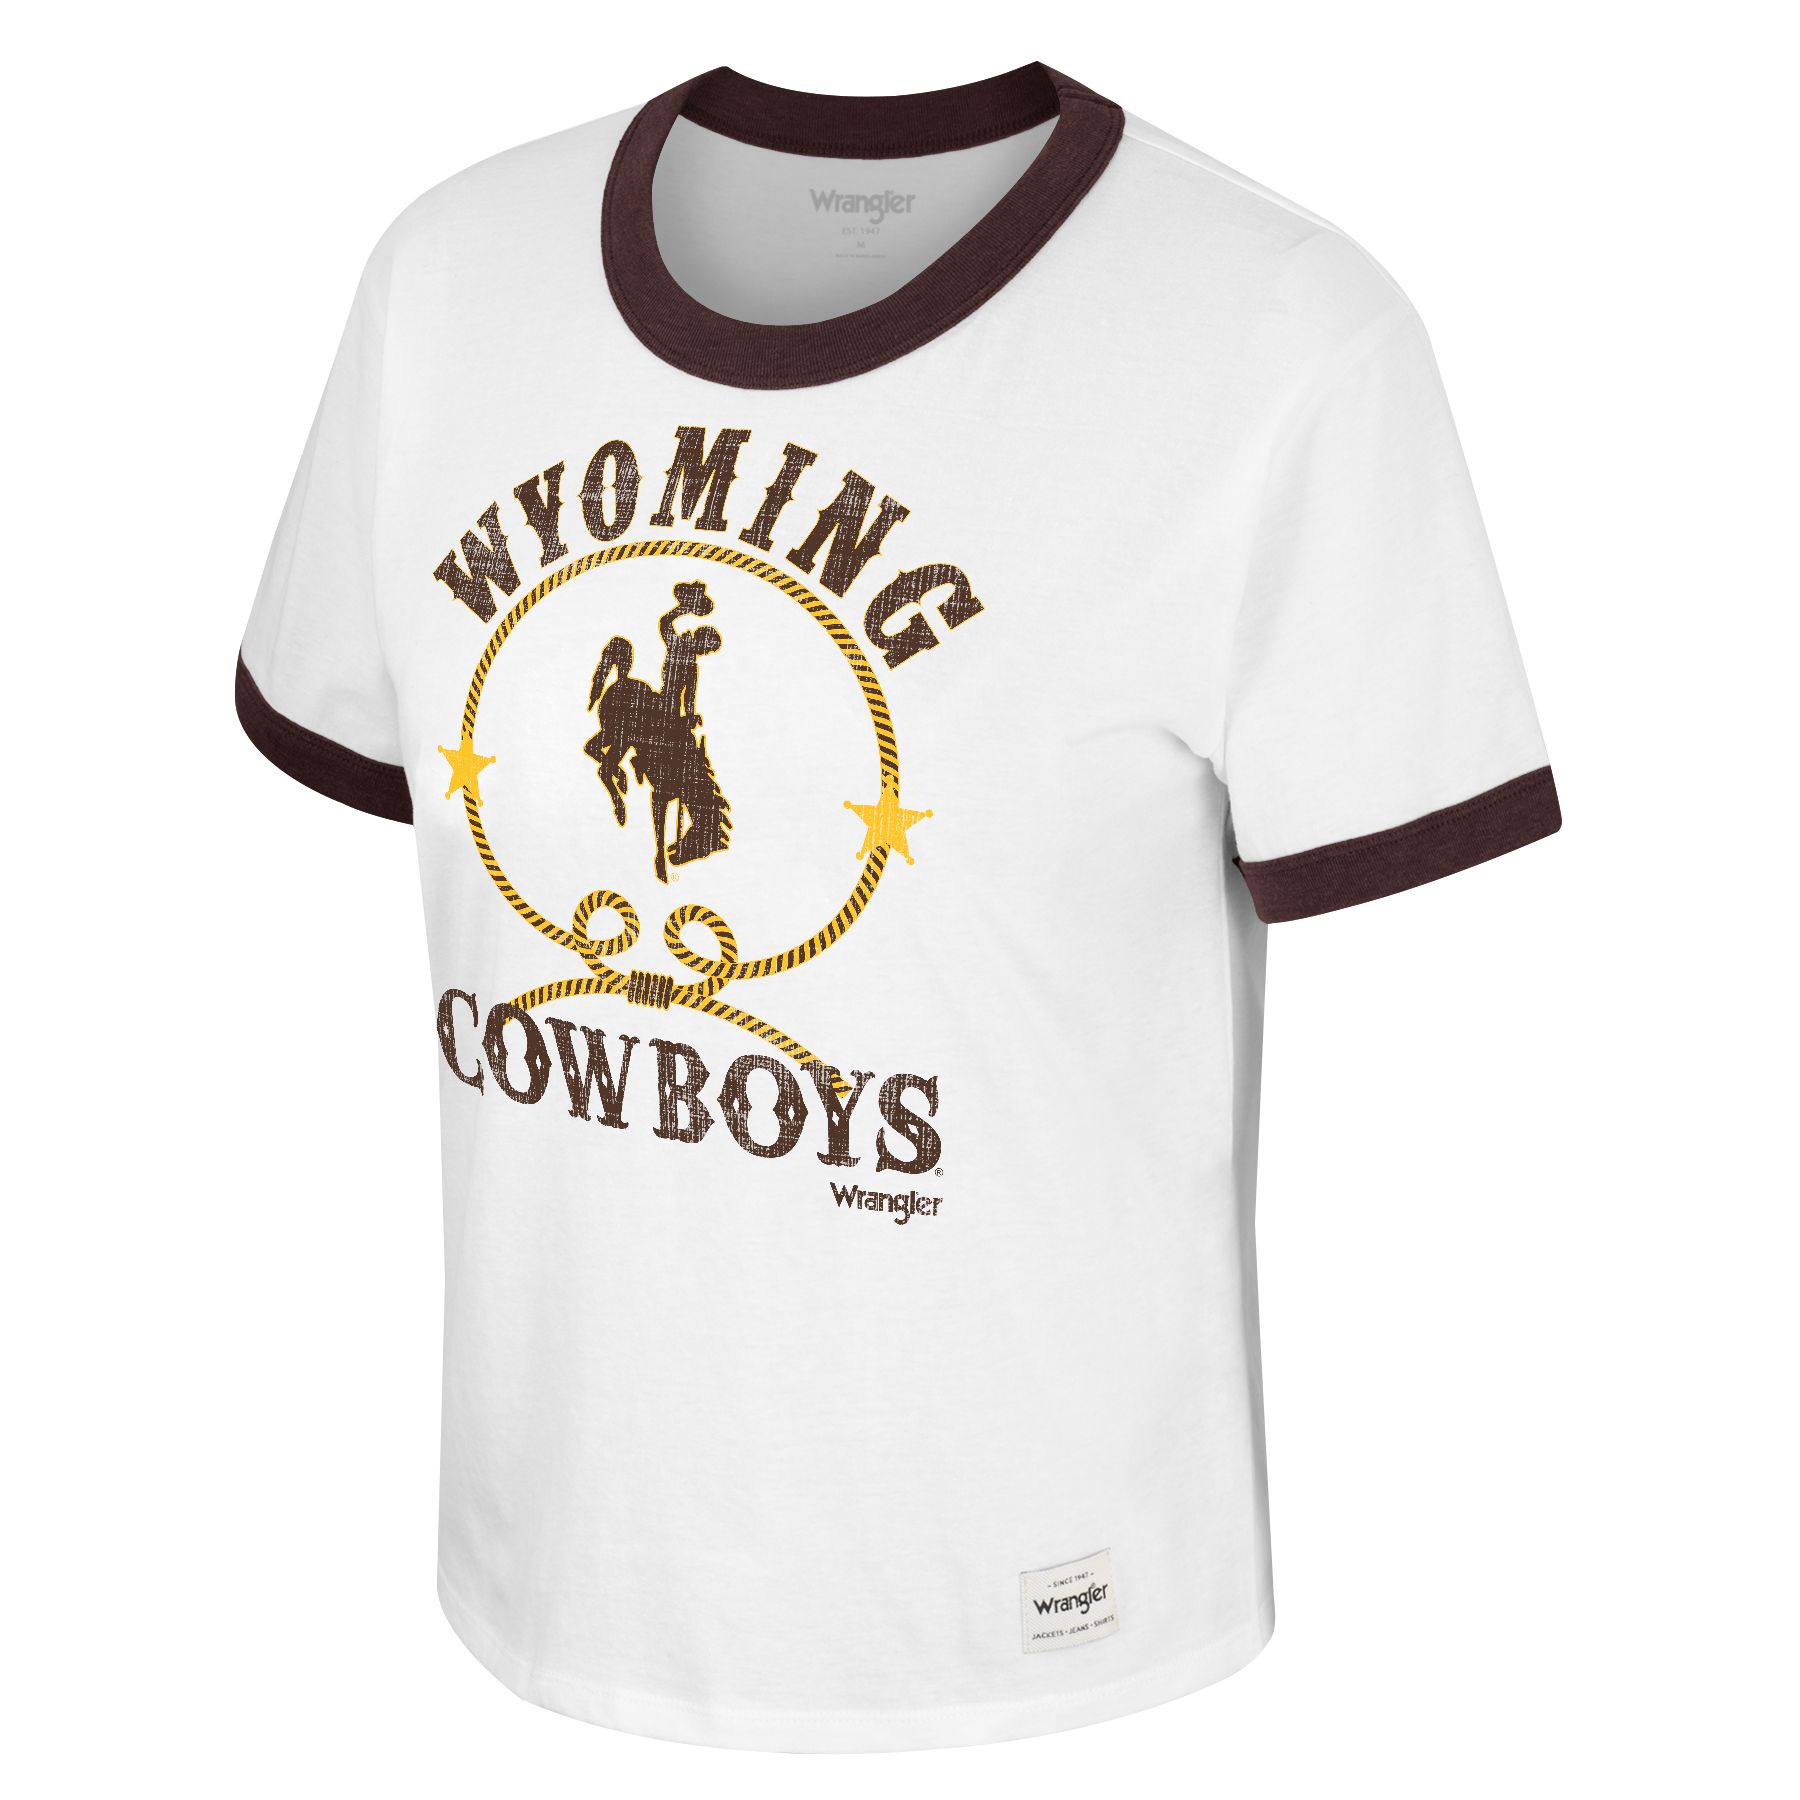 Wyoming Cowboys Women's Wrangler Freehand S/S Tee - White/Brown